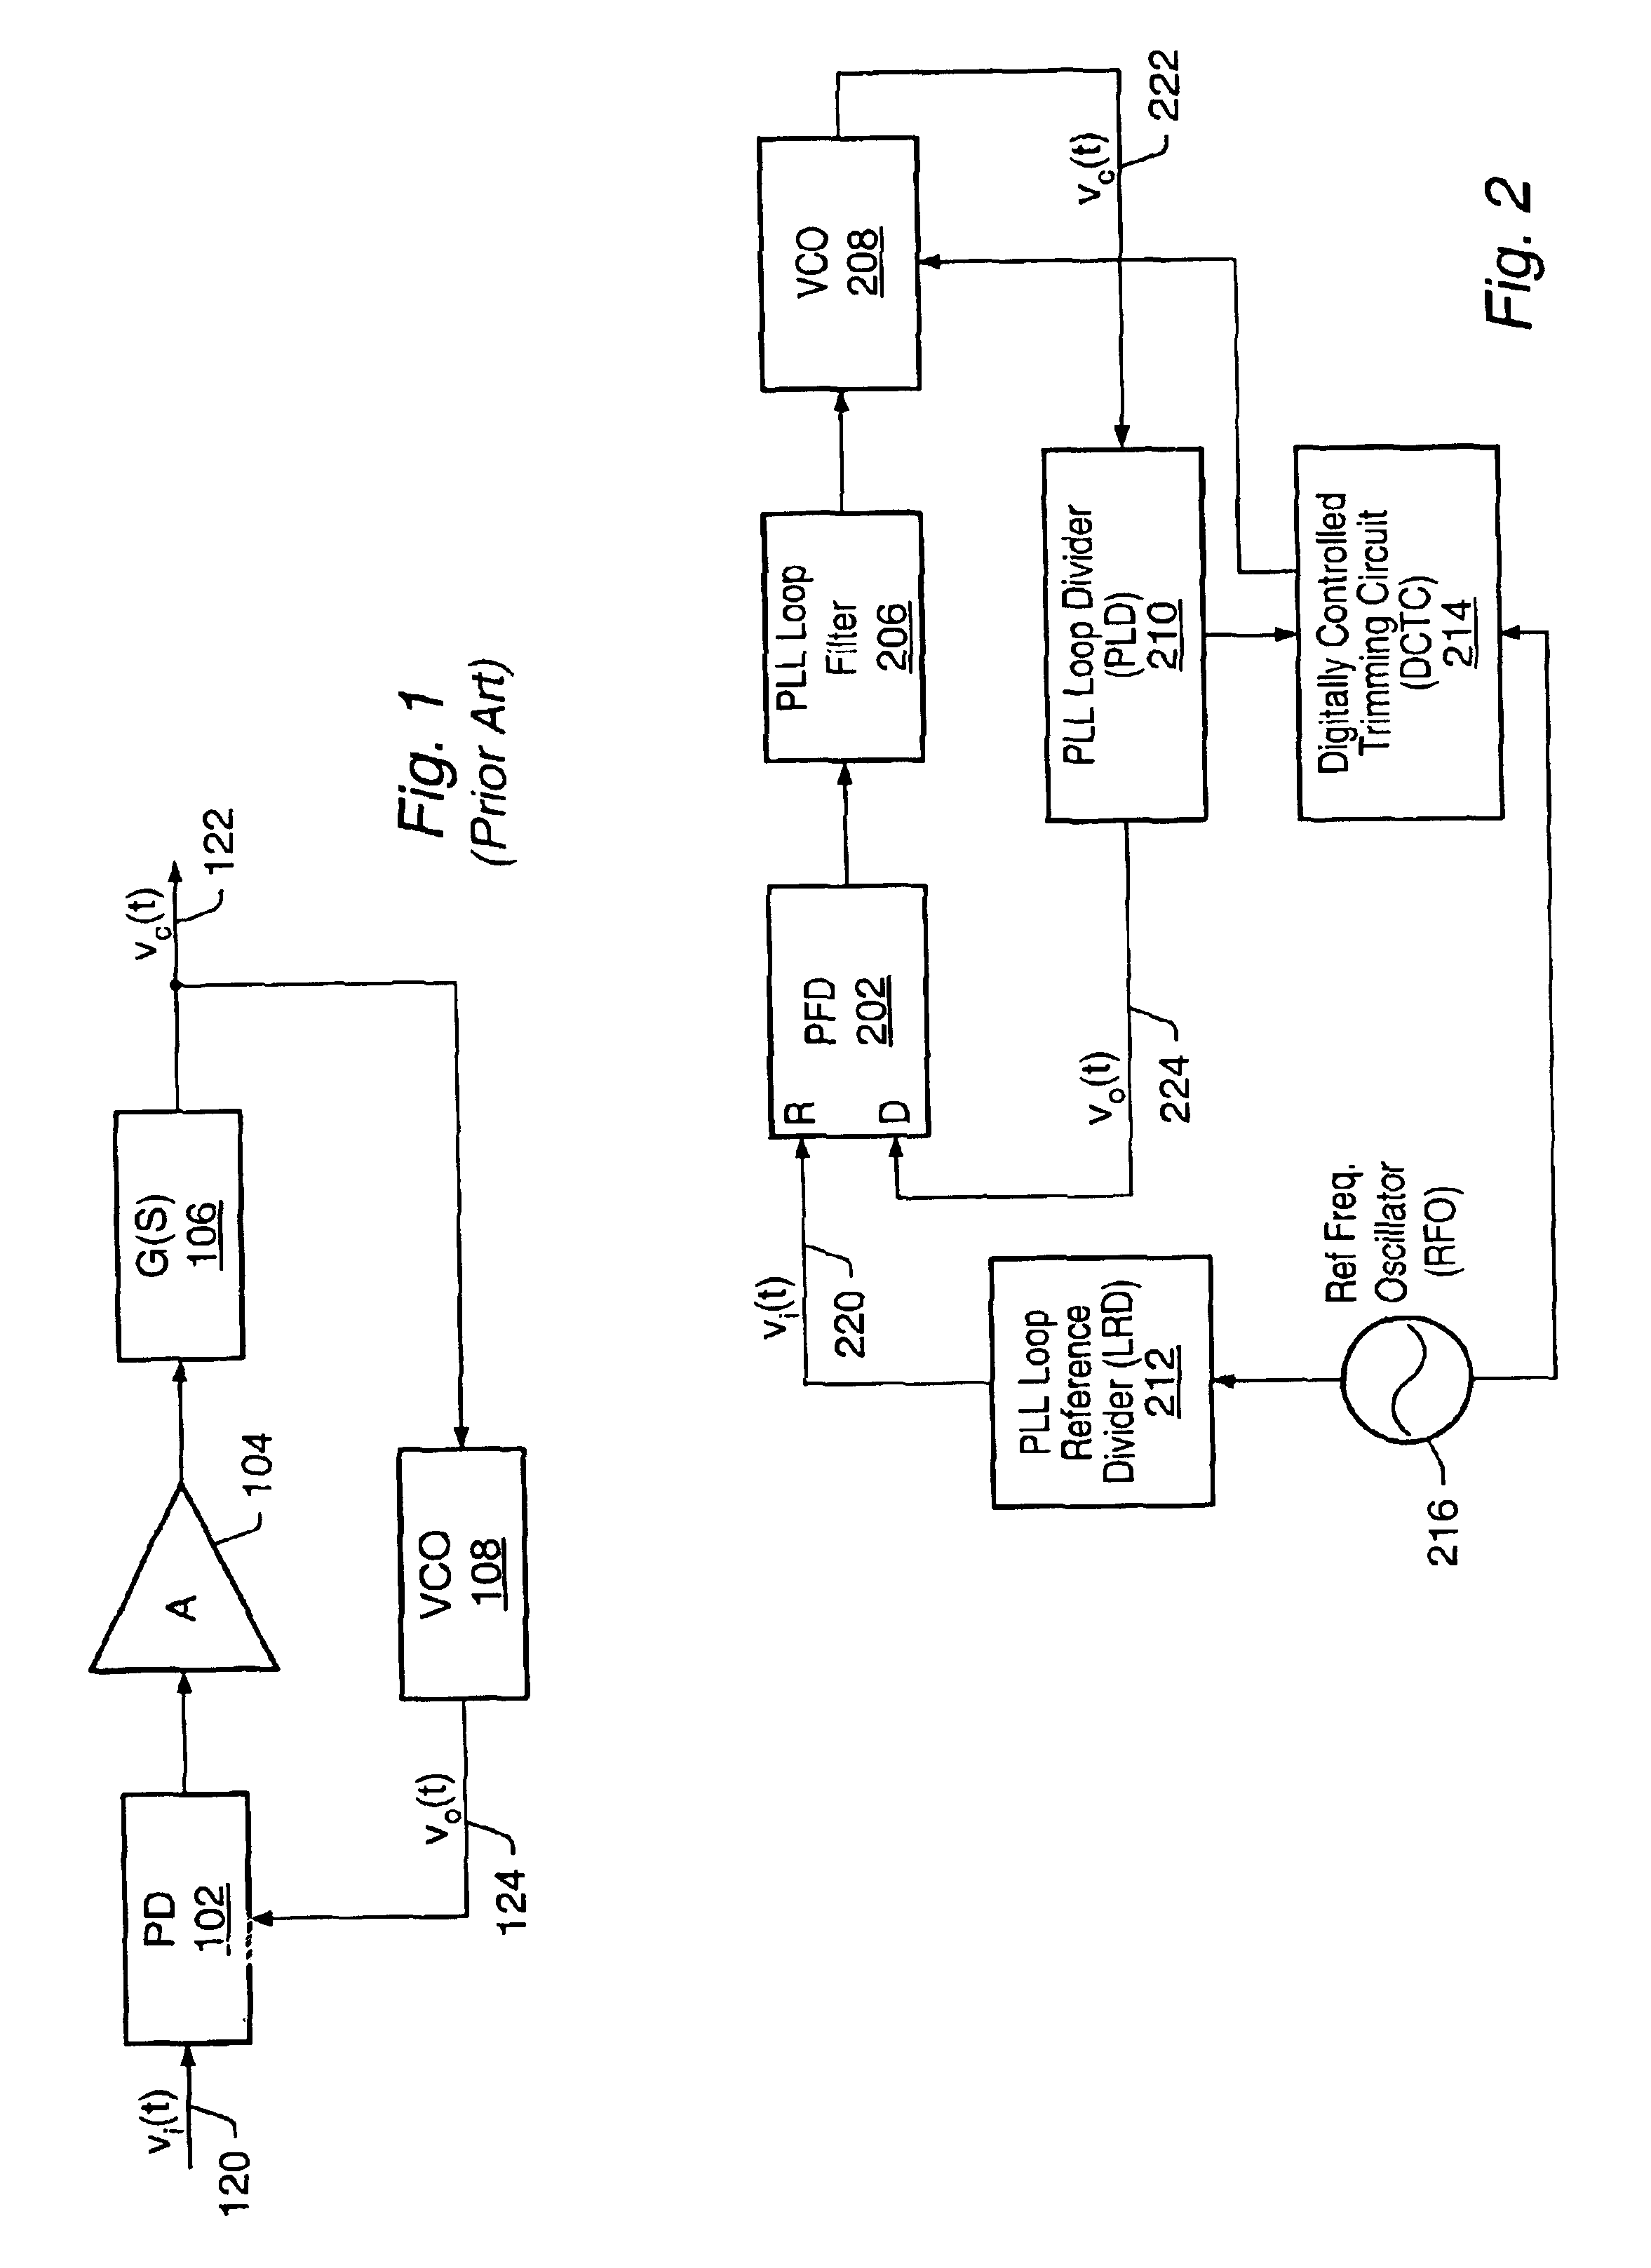 All digital PLL trimming circuit